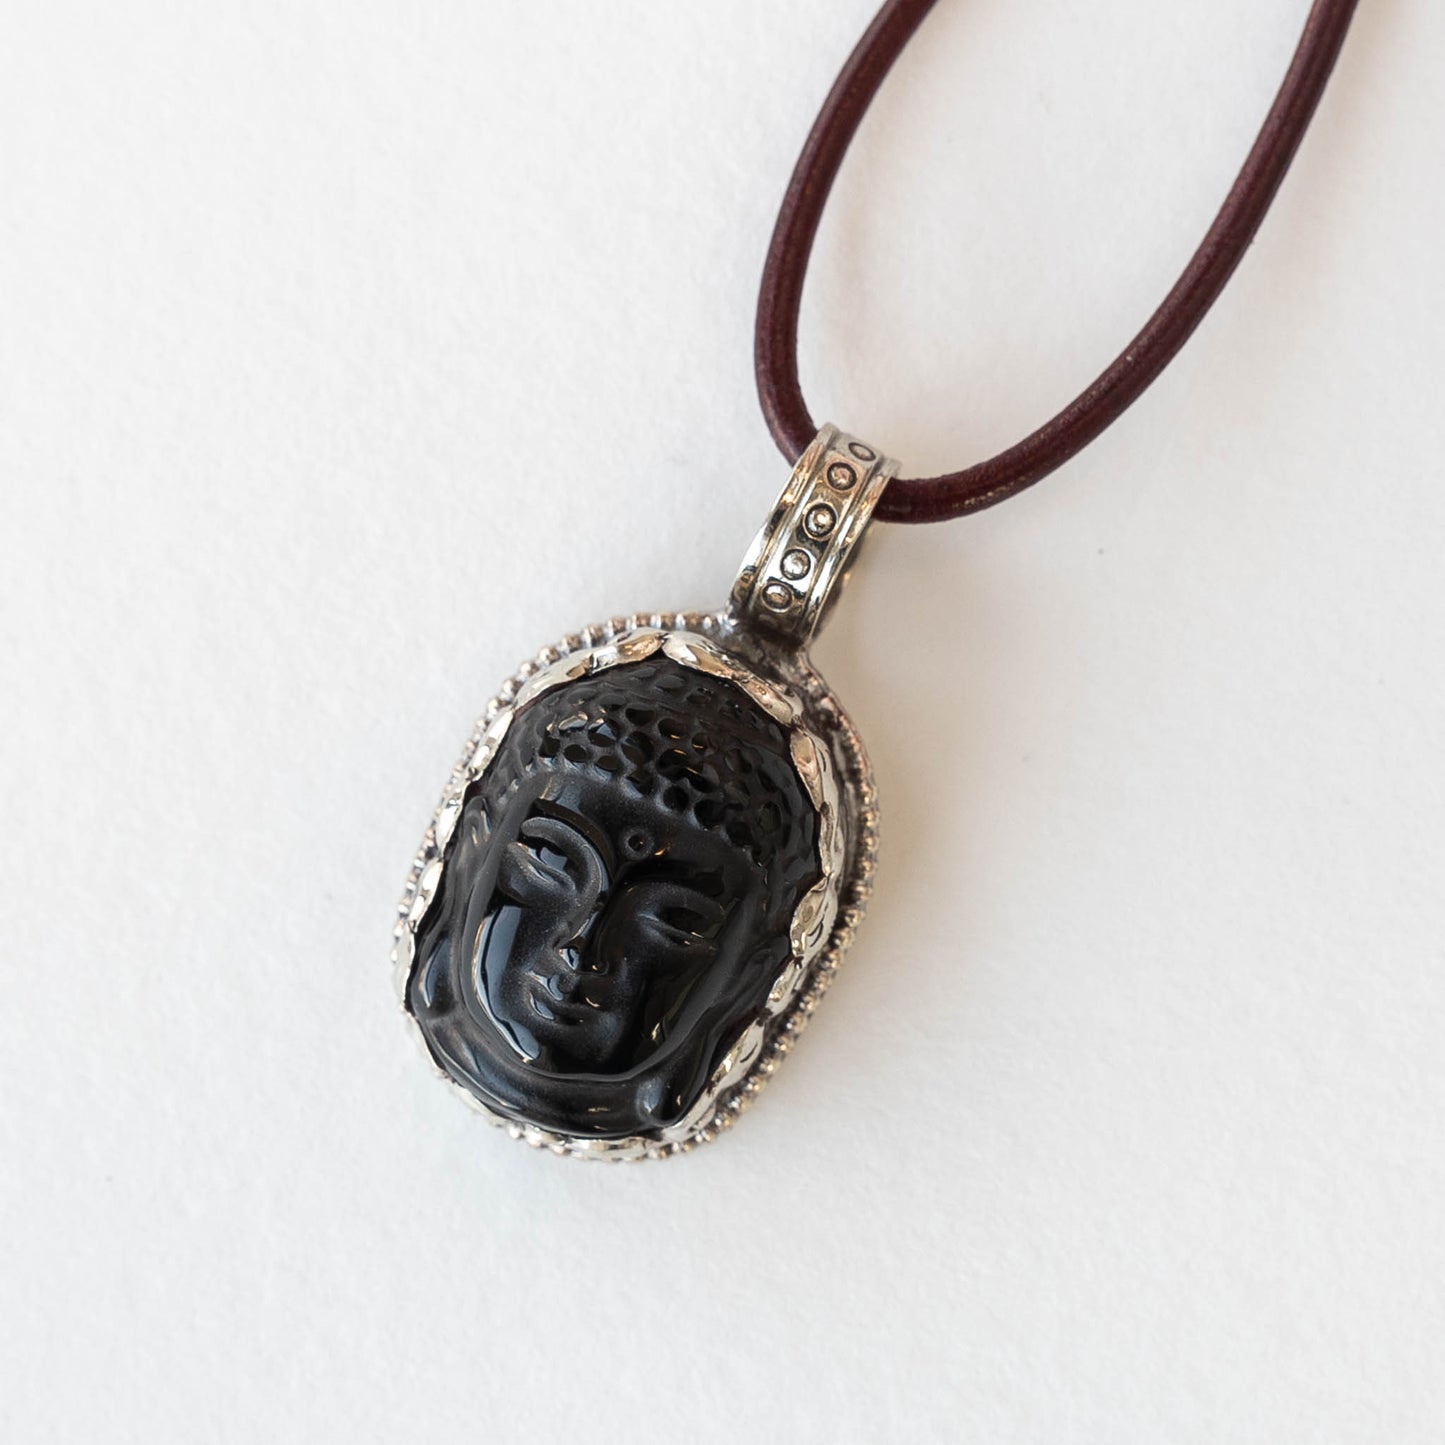 19mm Buddha Pendant - Black Matte Obsidian set in Tibetan Silver -  1 piece